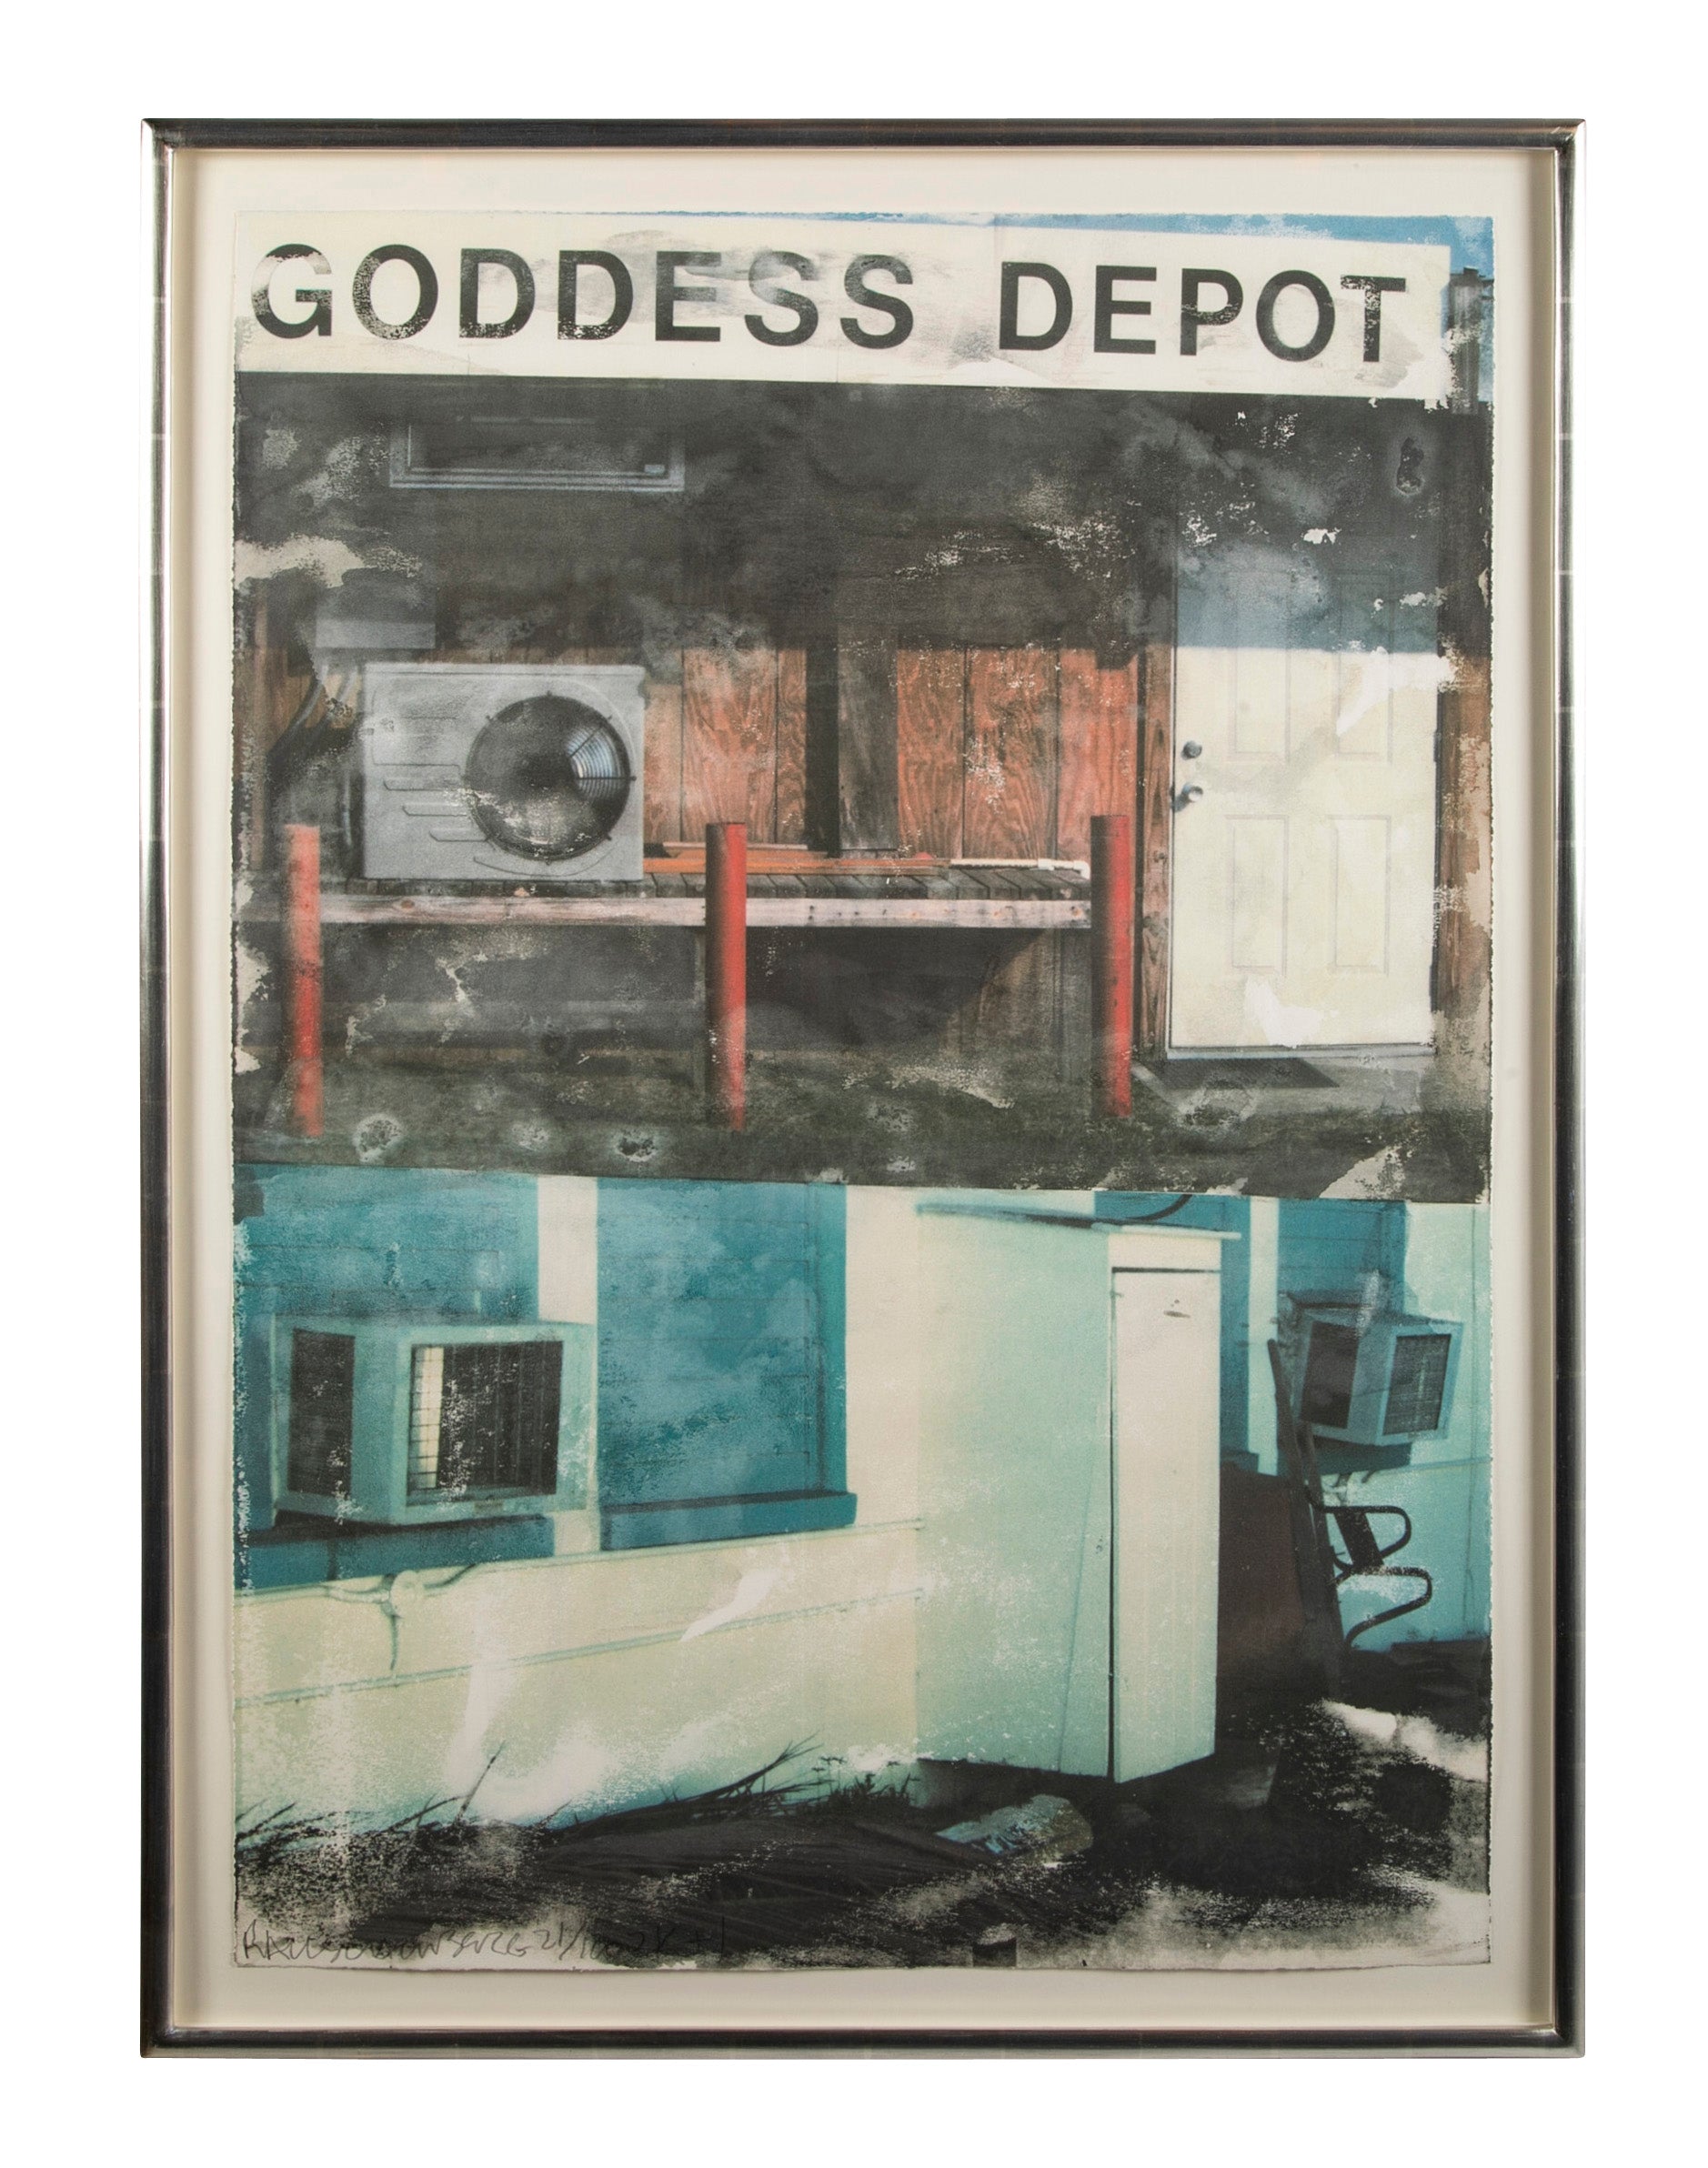 "In Transit ( Goddess Depot )" by Robert Rauschenberg